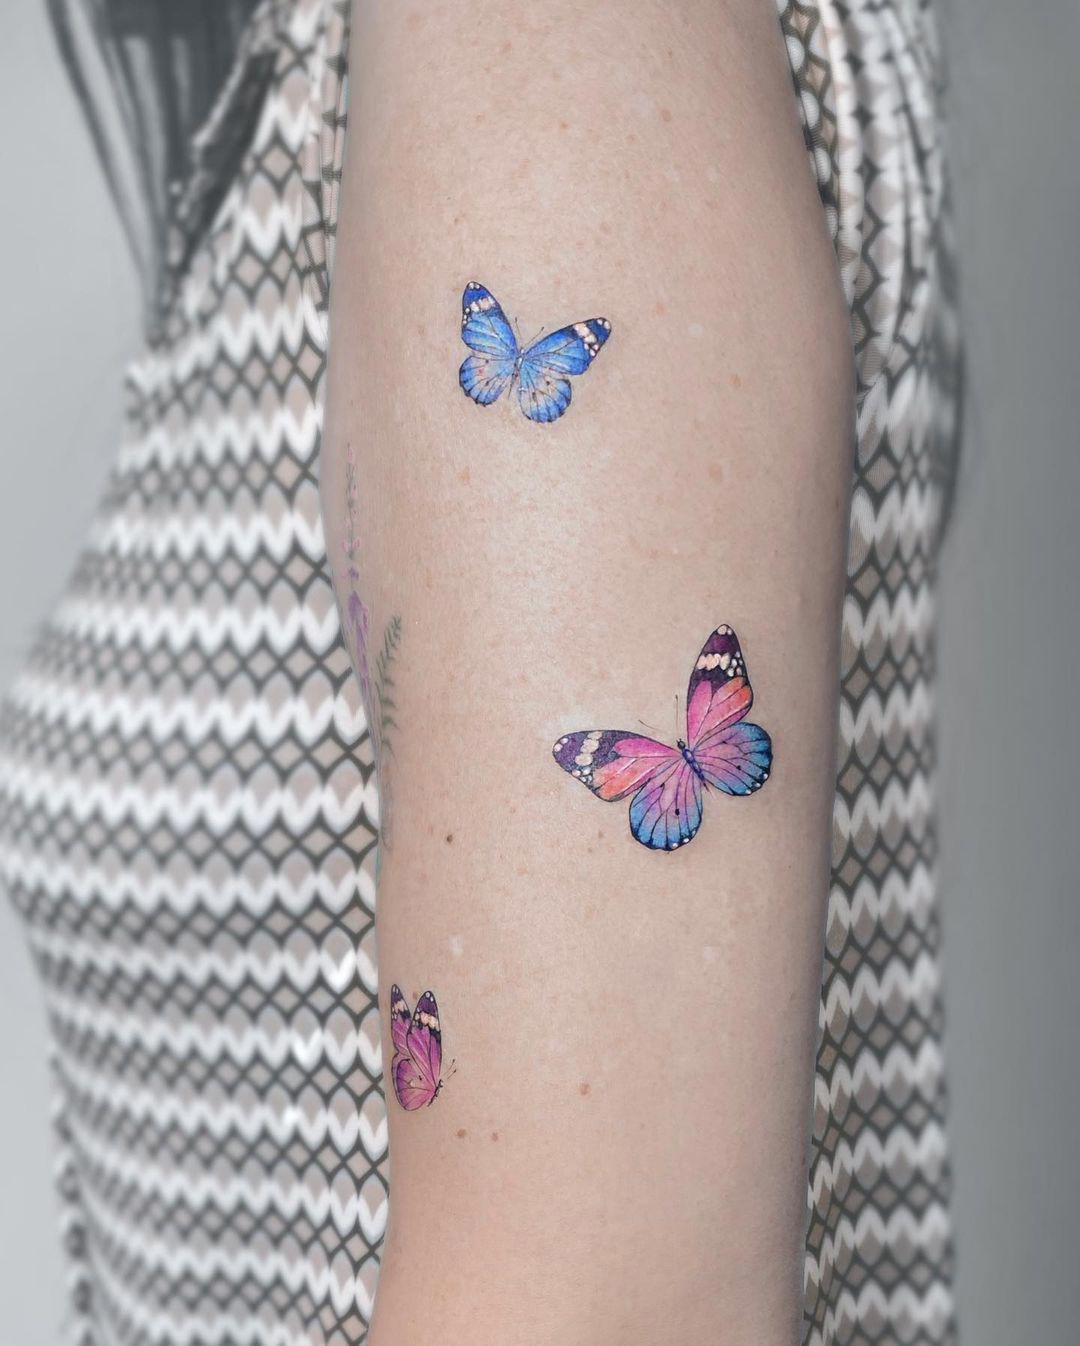 Tres mariposas tatuadas sobre el brazo